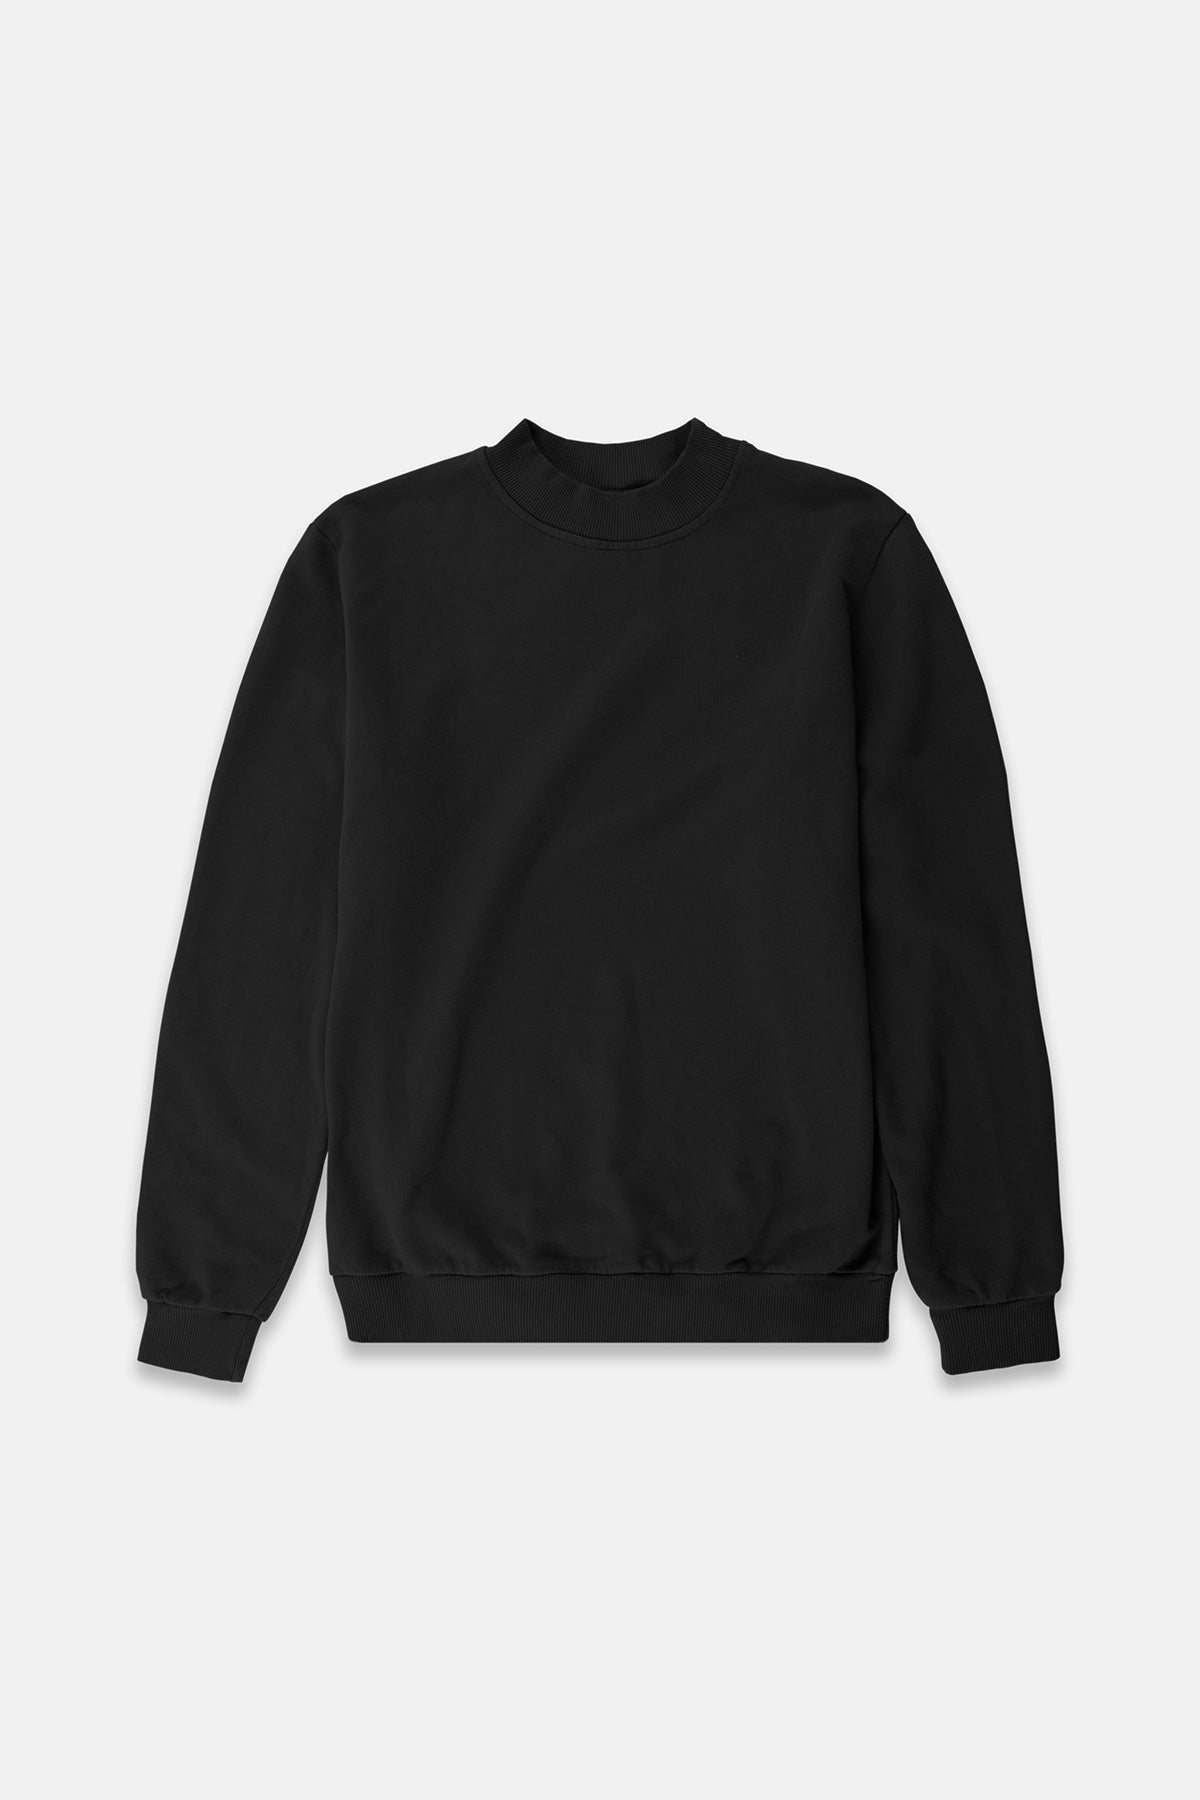 Black French Terry Sweatshirt - Polonio